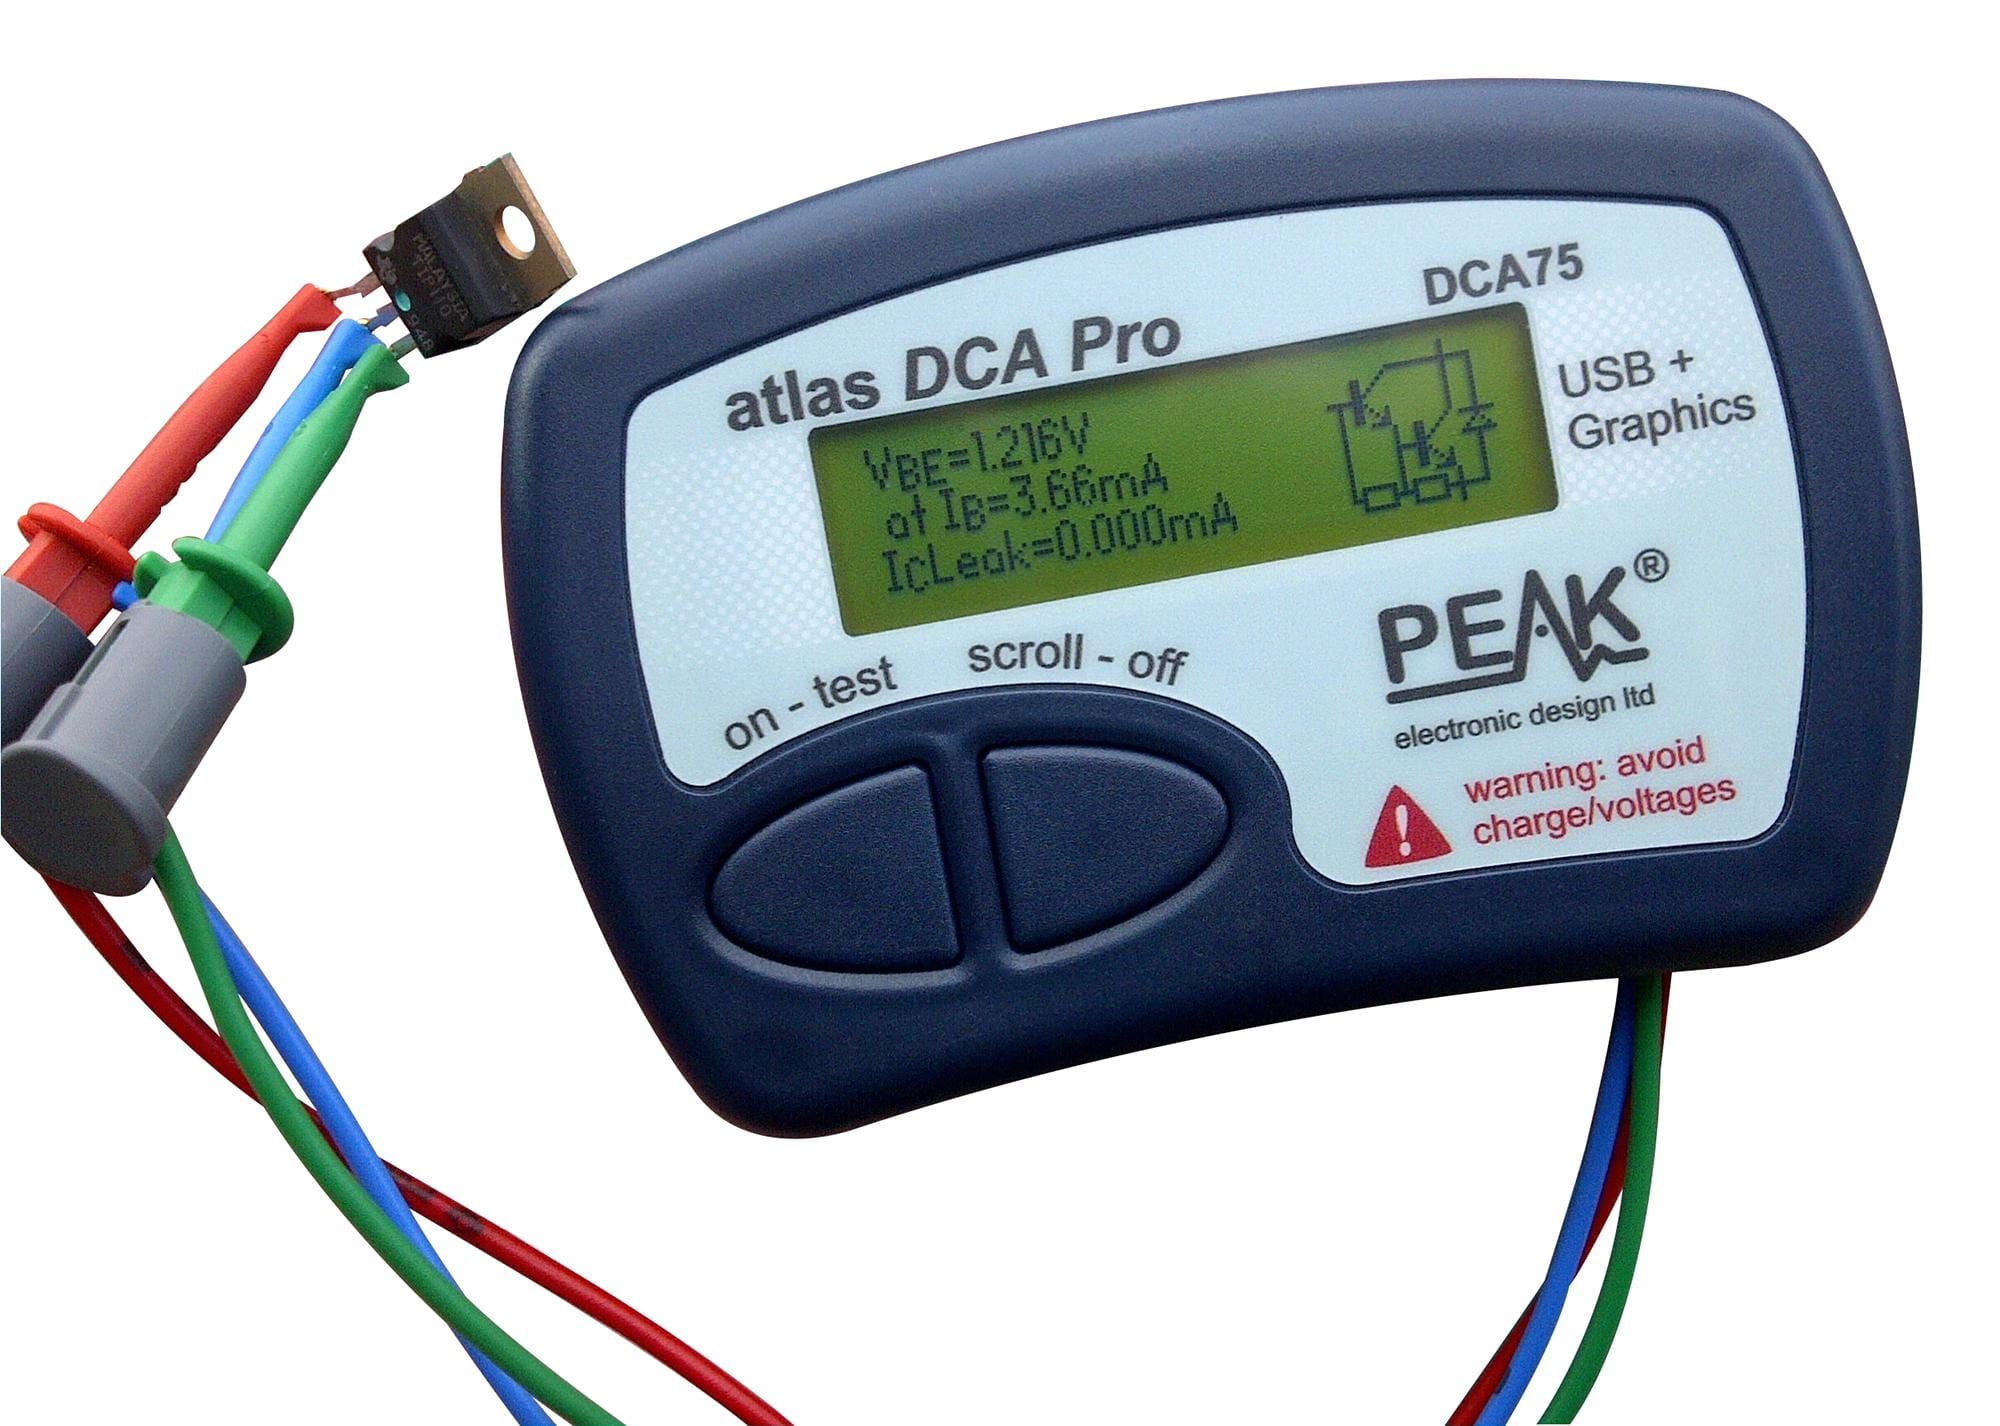 PEAK ELECTRONIC DESIGN Component Analyser DCA75 SEMICONDUCTOR COMPONENT ANALYSER PEAK ELECTRONIC DESIGN 2917877 DCA75